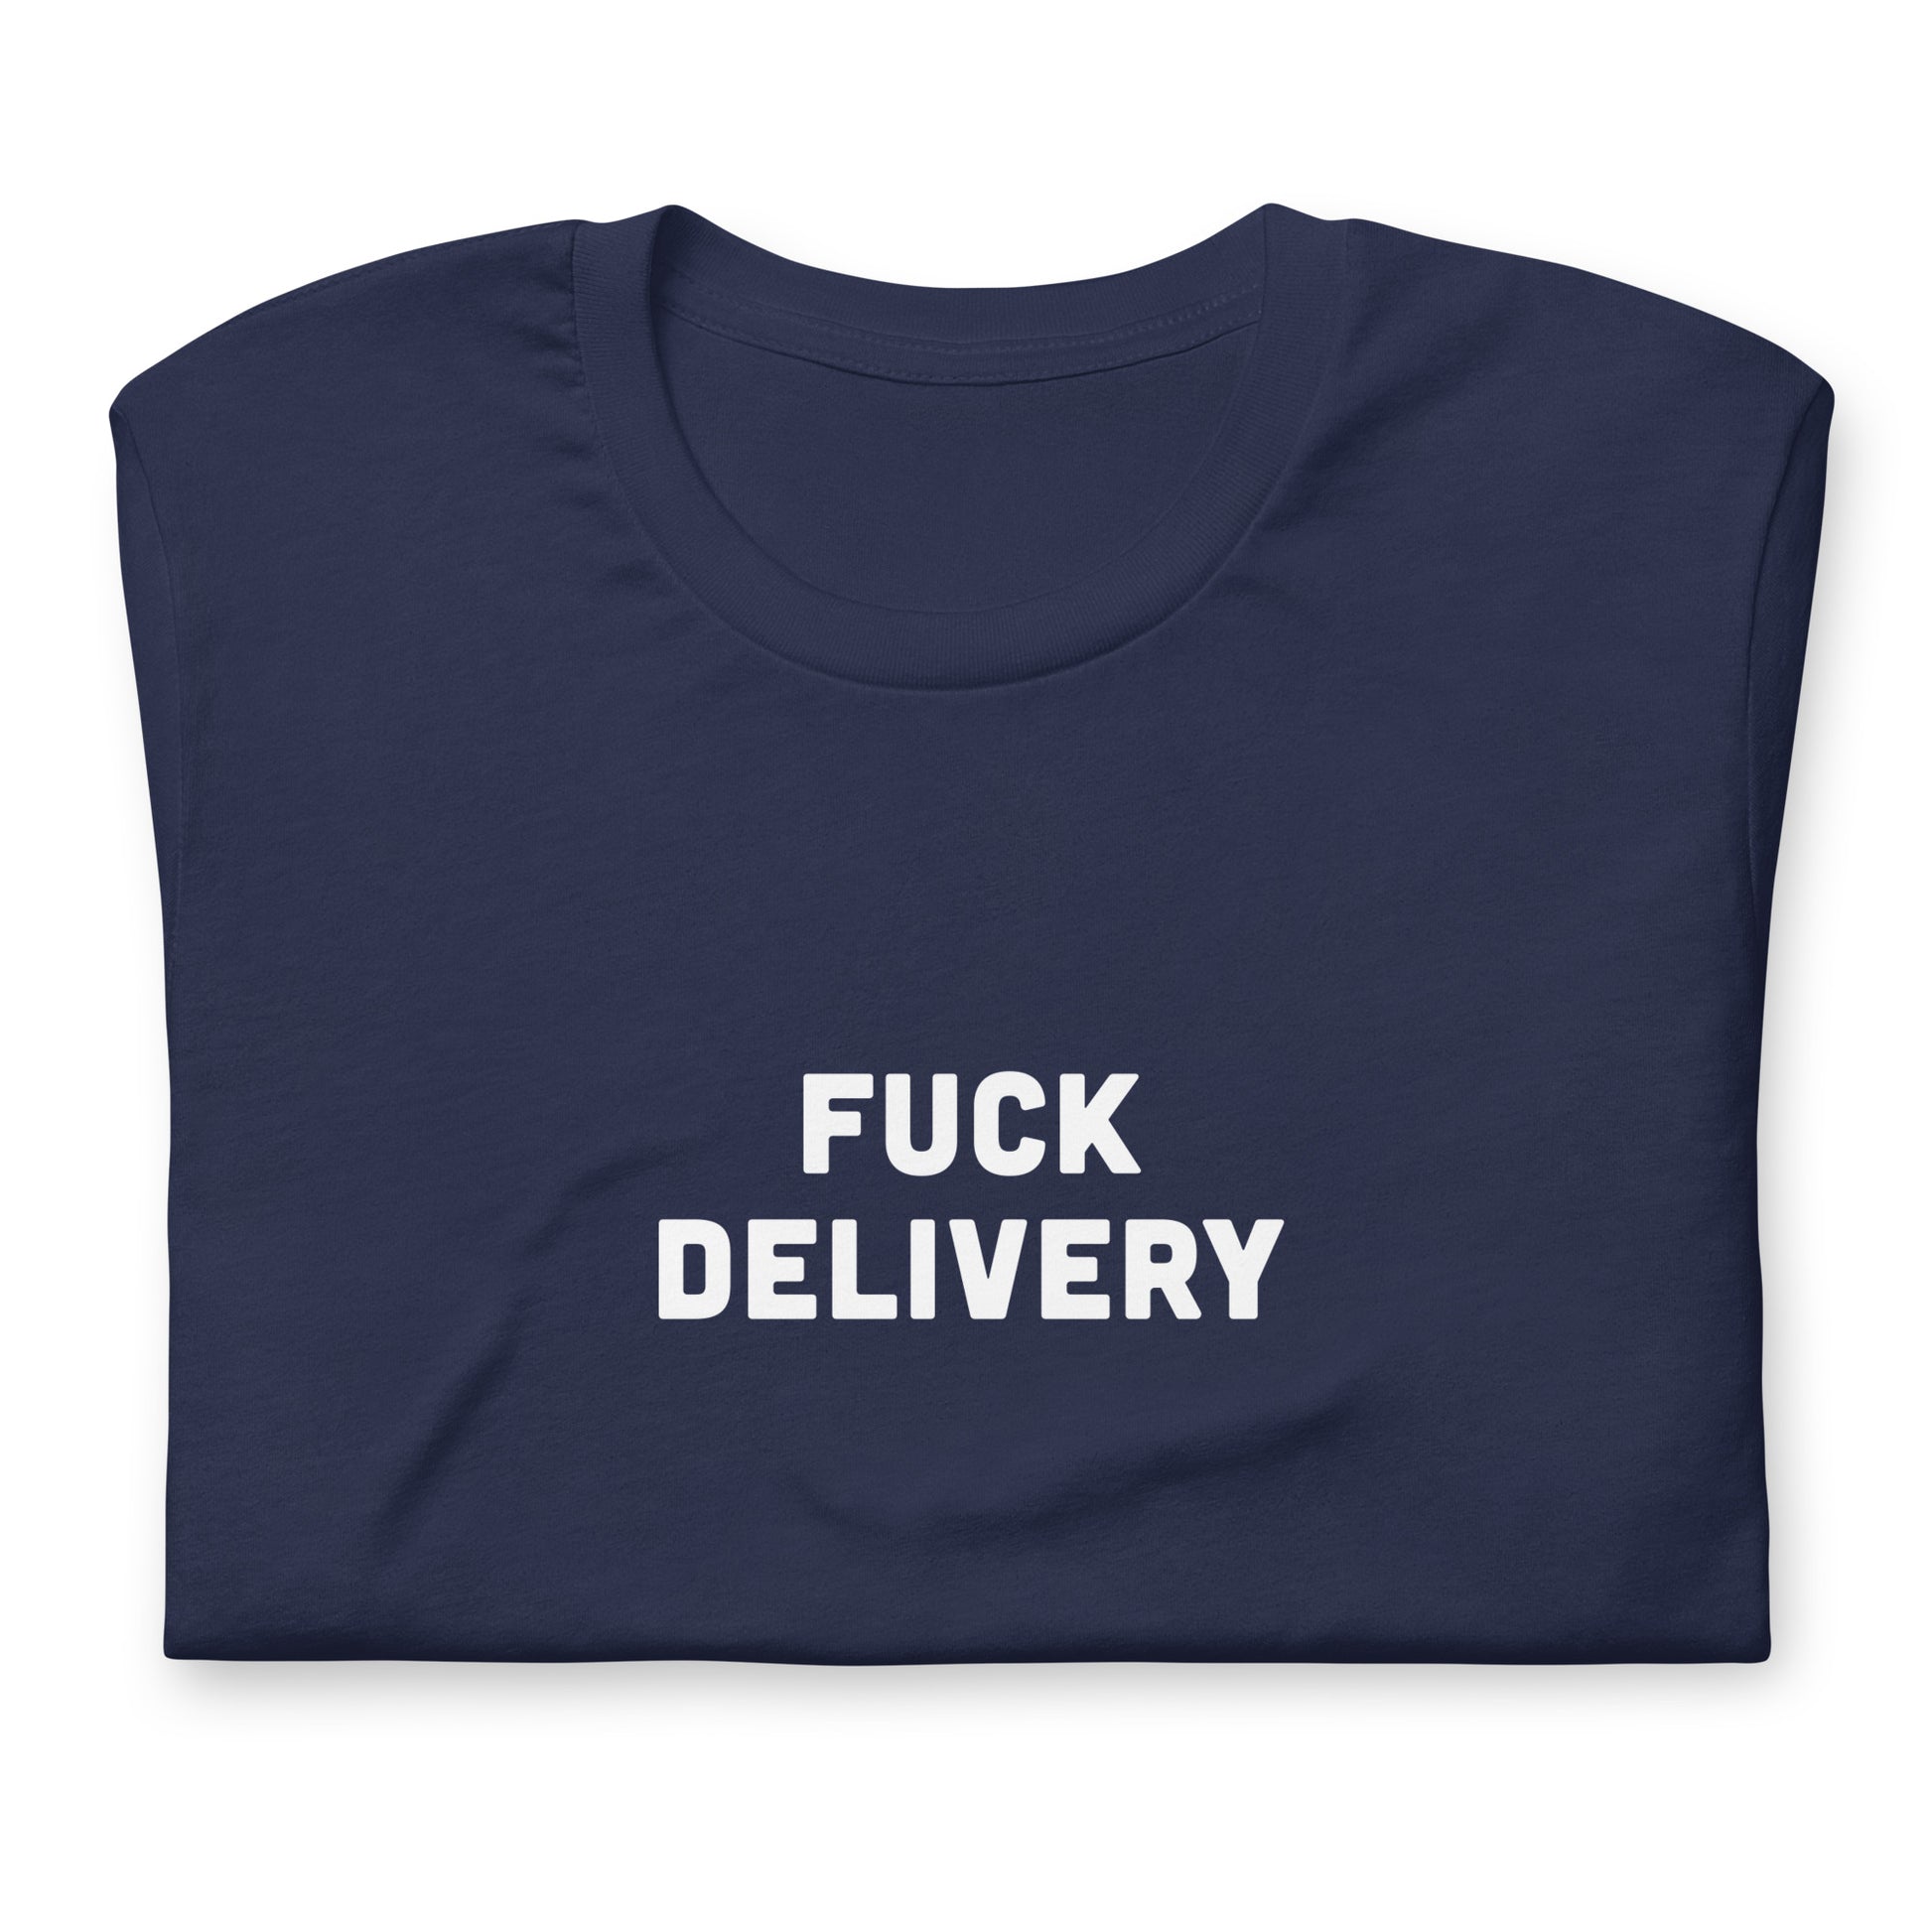 Fuck Delivery T-Shirt Size 2XL Color Black